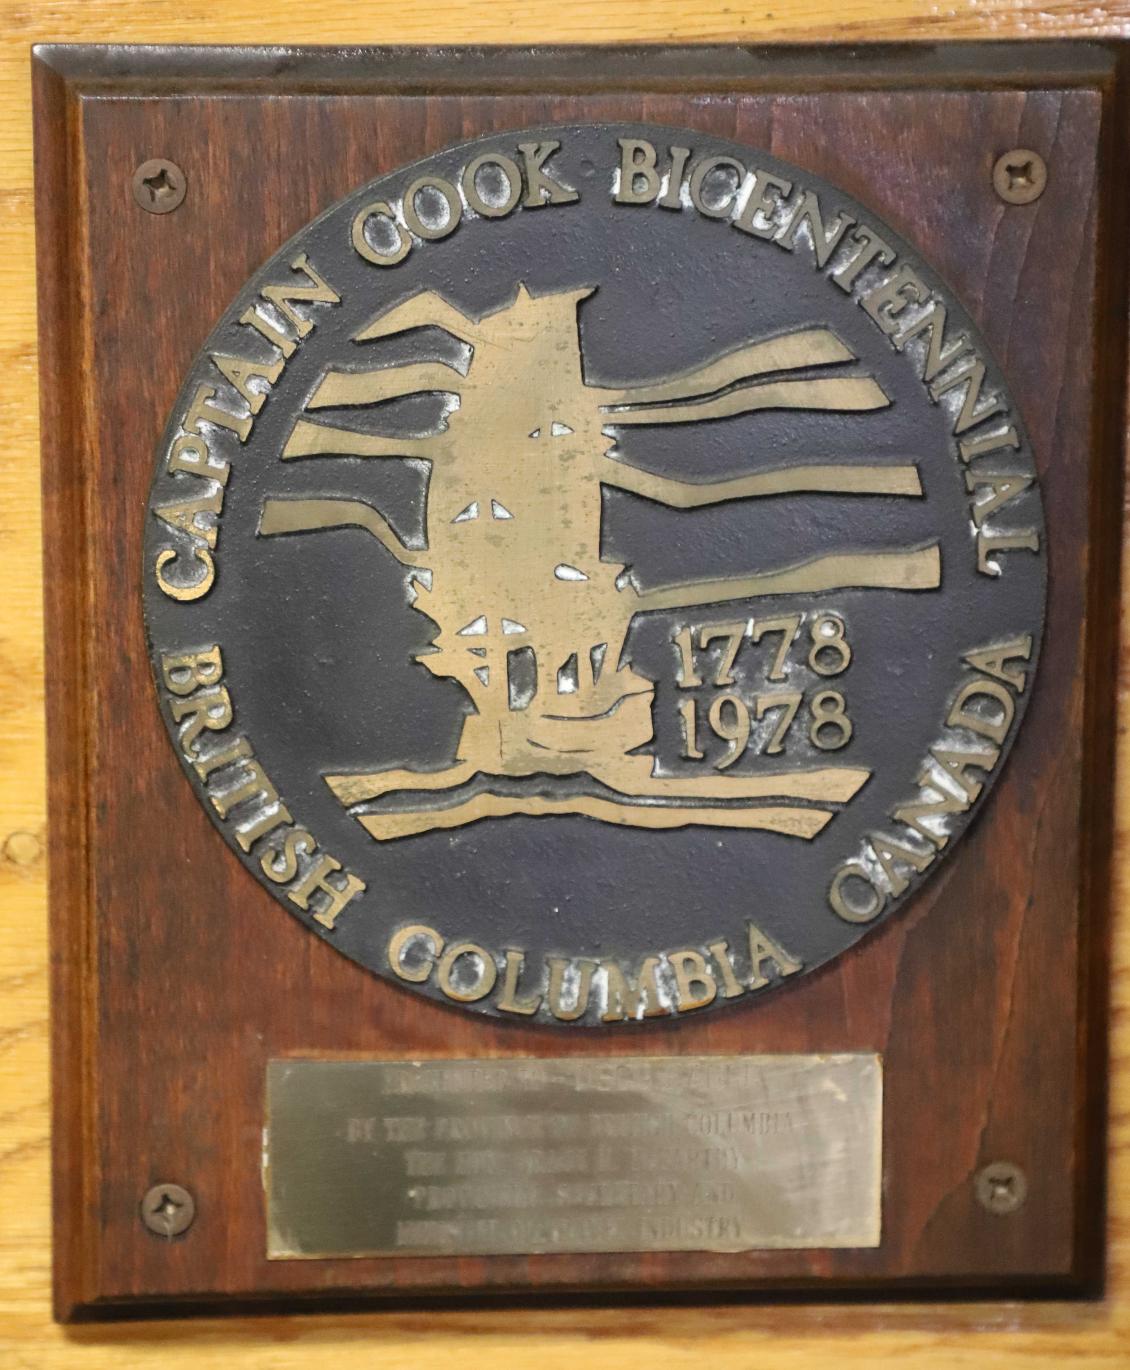 U.S. Coast Guard Eagle - Captain Cook Bicentennial 1978 British Columbia